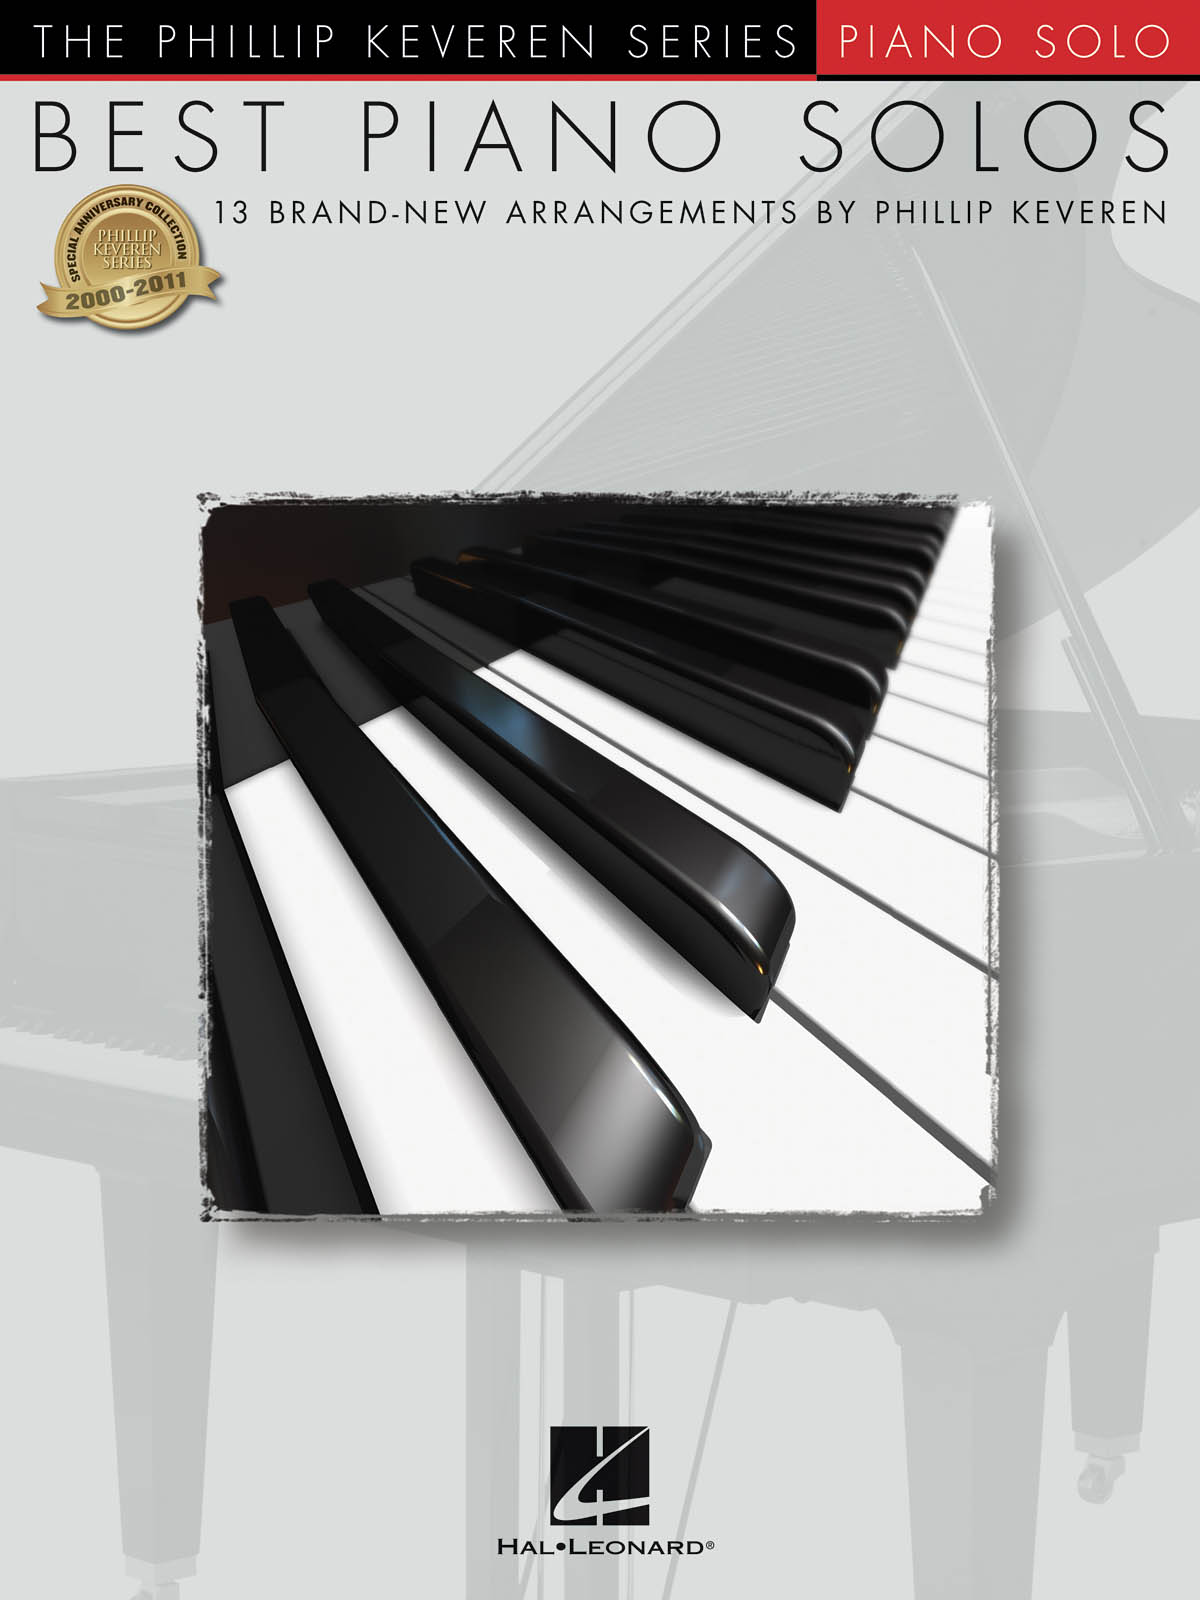 Best Piano Solos - 13 Brand-New Arrangements - The Phillip Keveren Series známé písně pro klavír